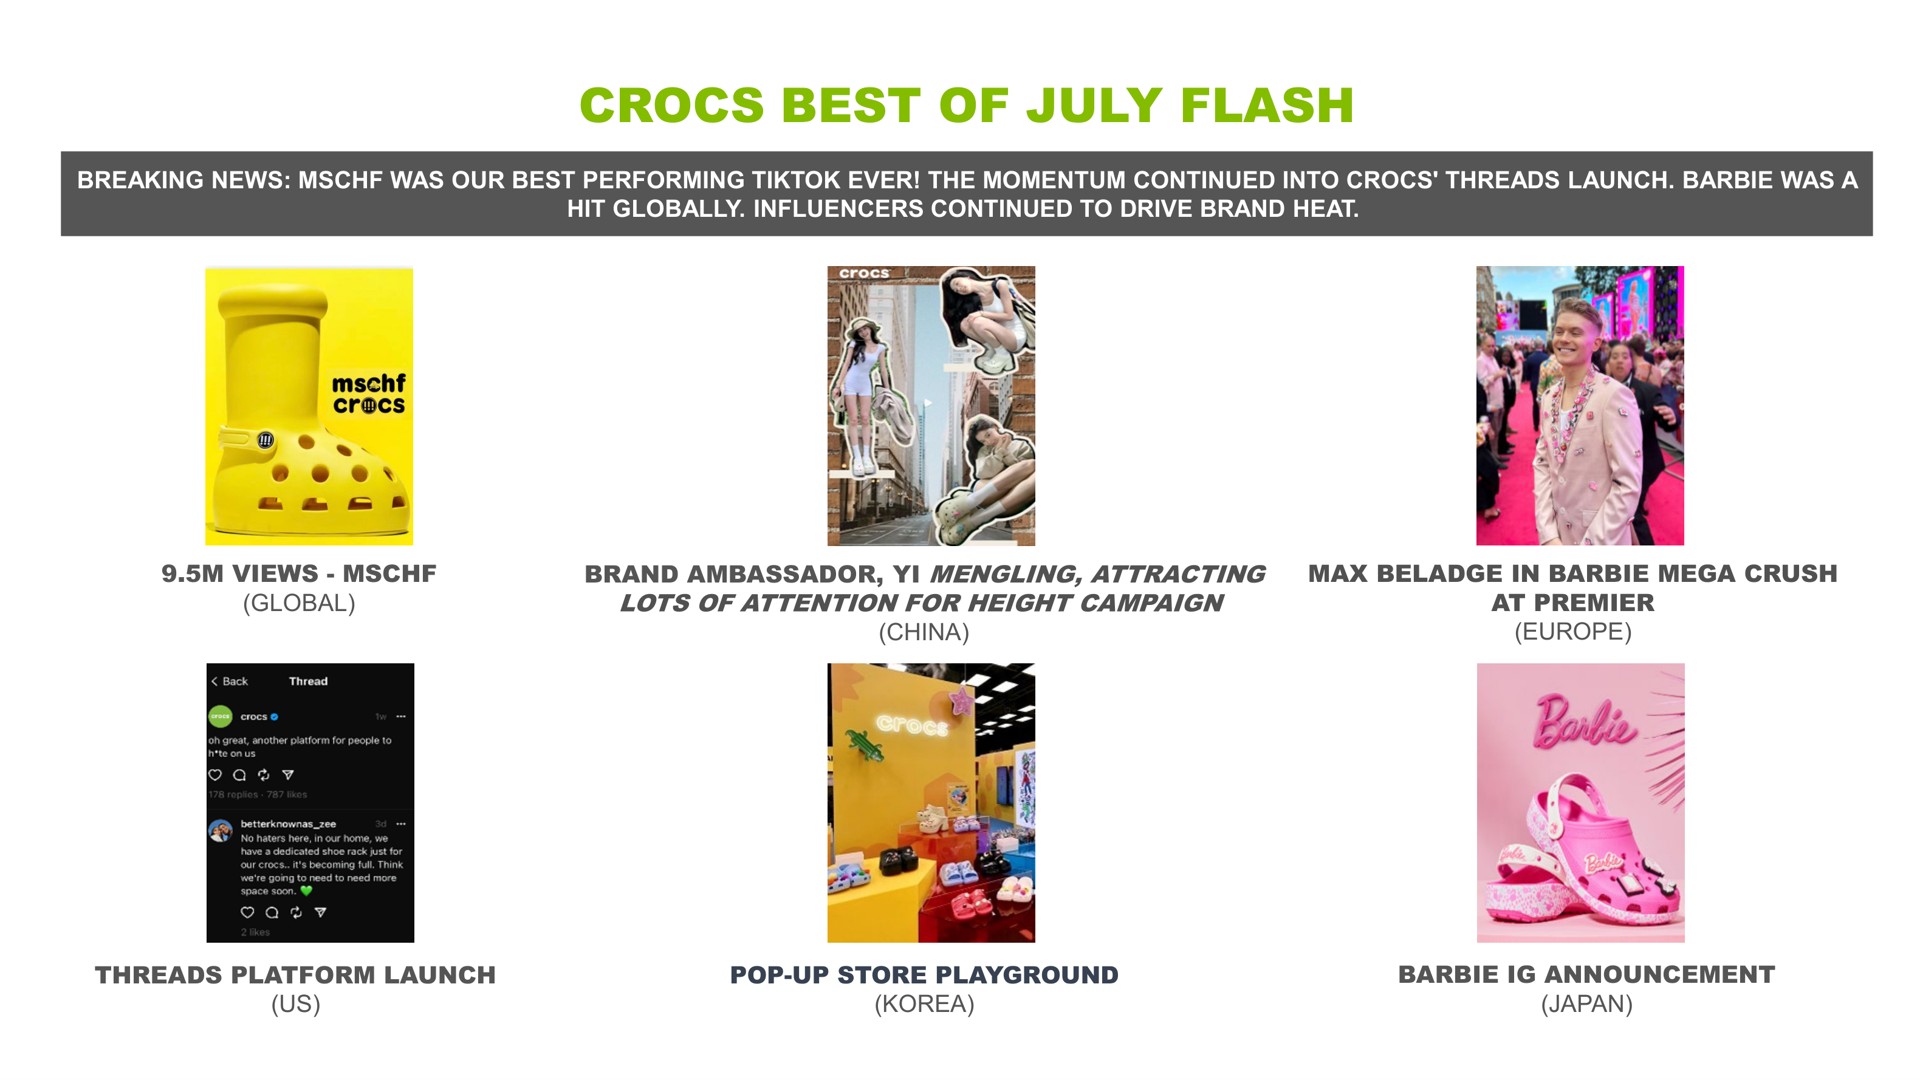 best of flash china threads platform launch us pop up store playground announcement japan | Crocs